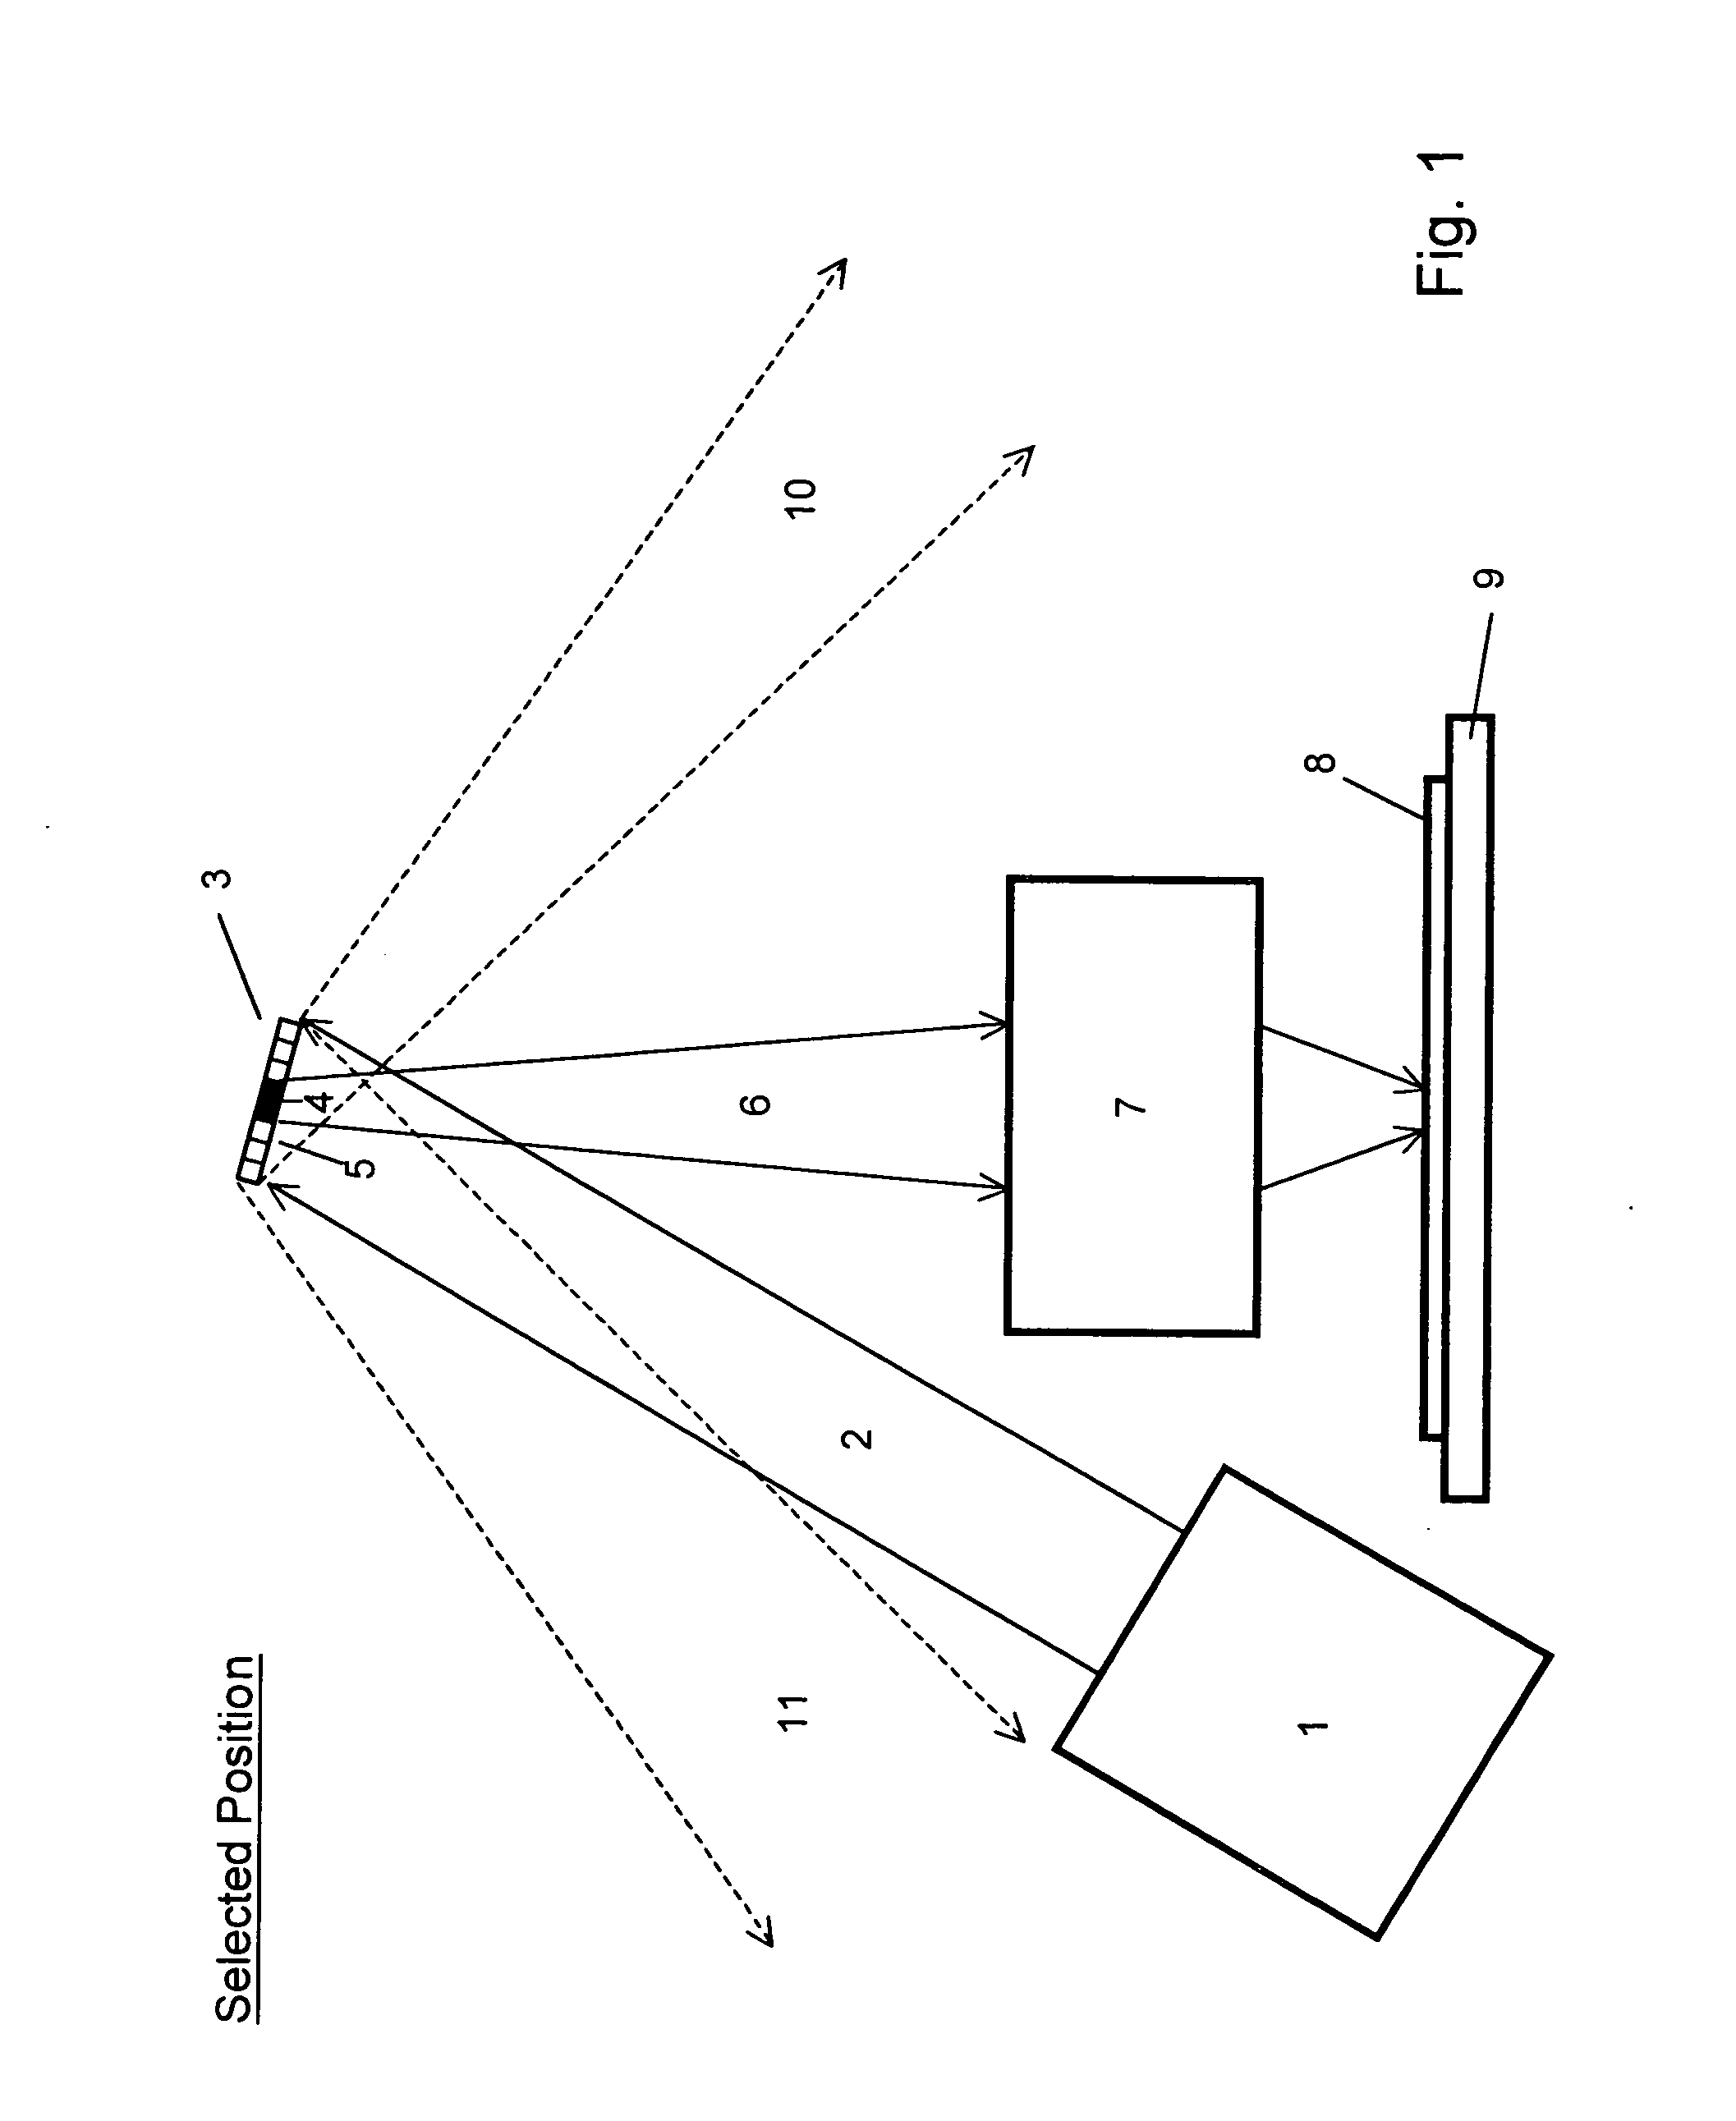 Spatial light modulator features